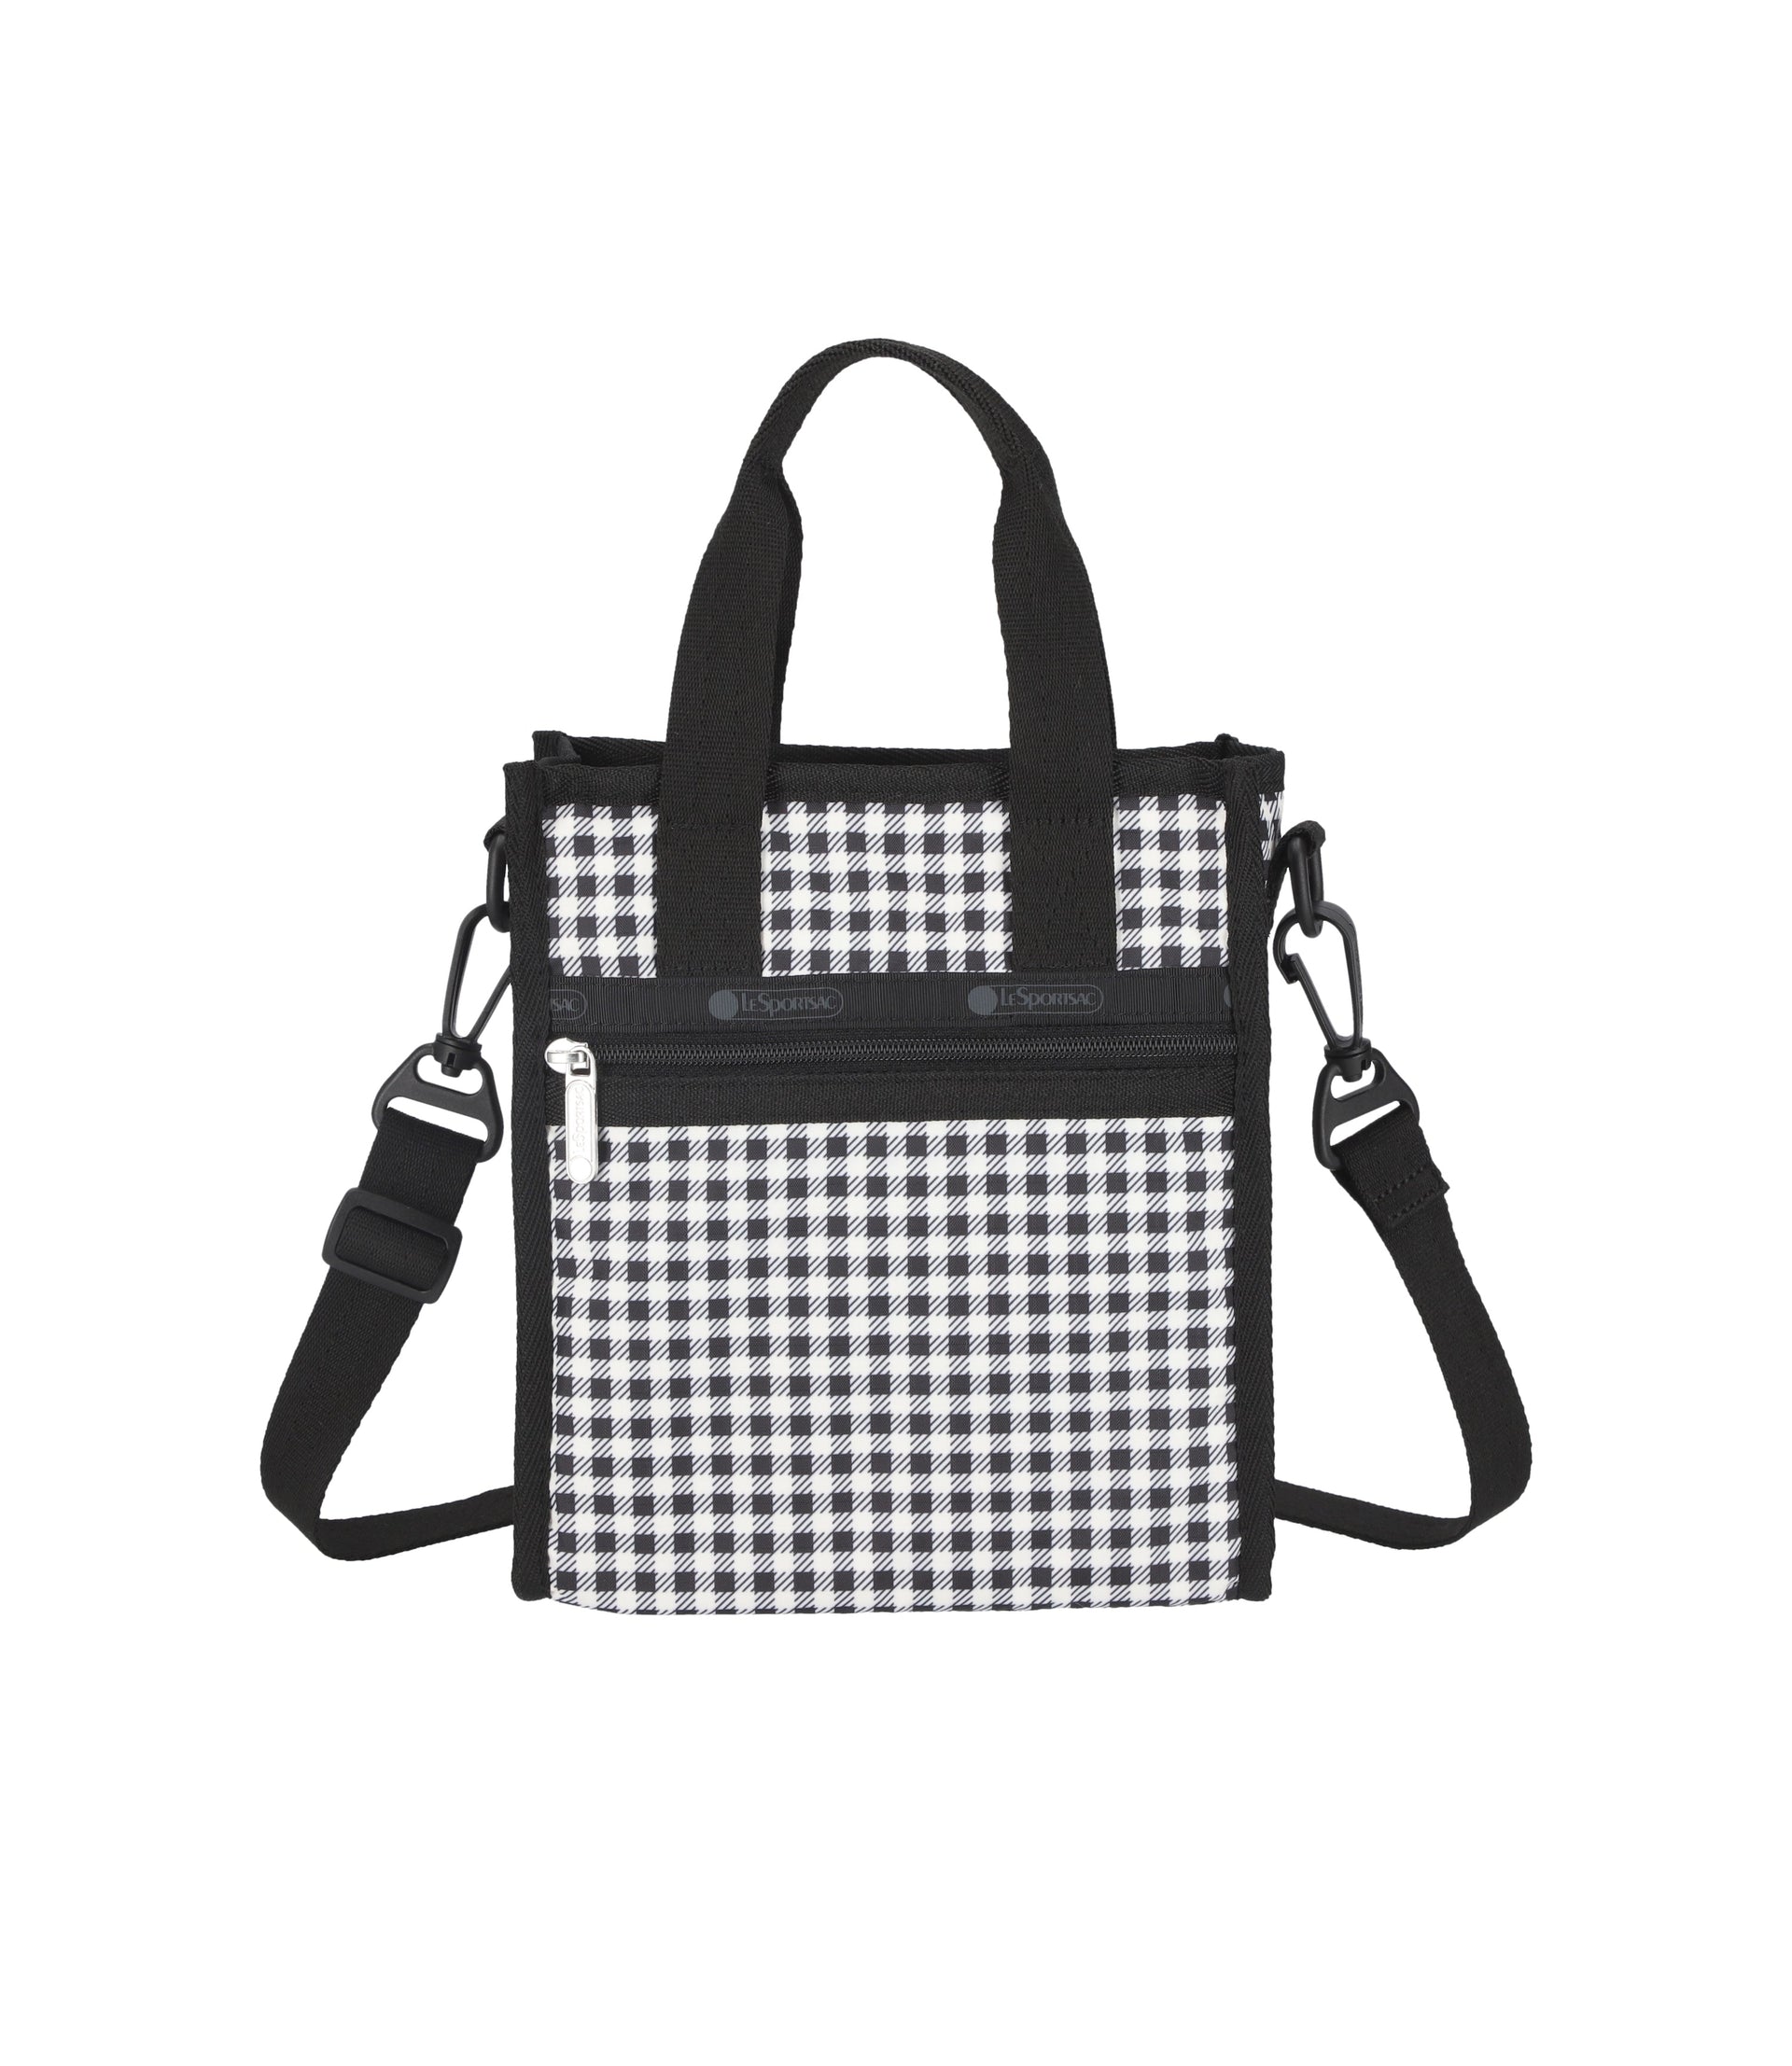 Checkered Purse Black White Handbag Checkered Shoulder Bag -  Israel